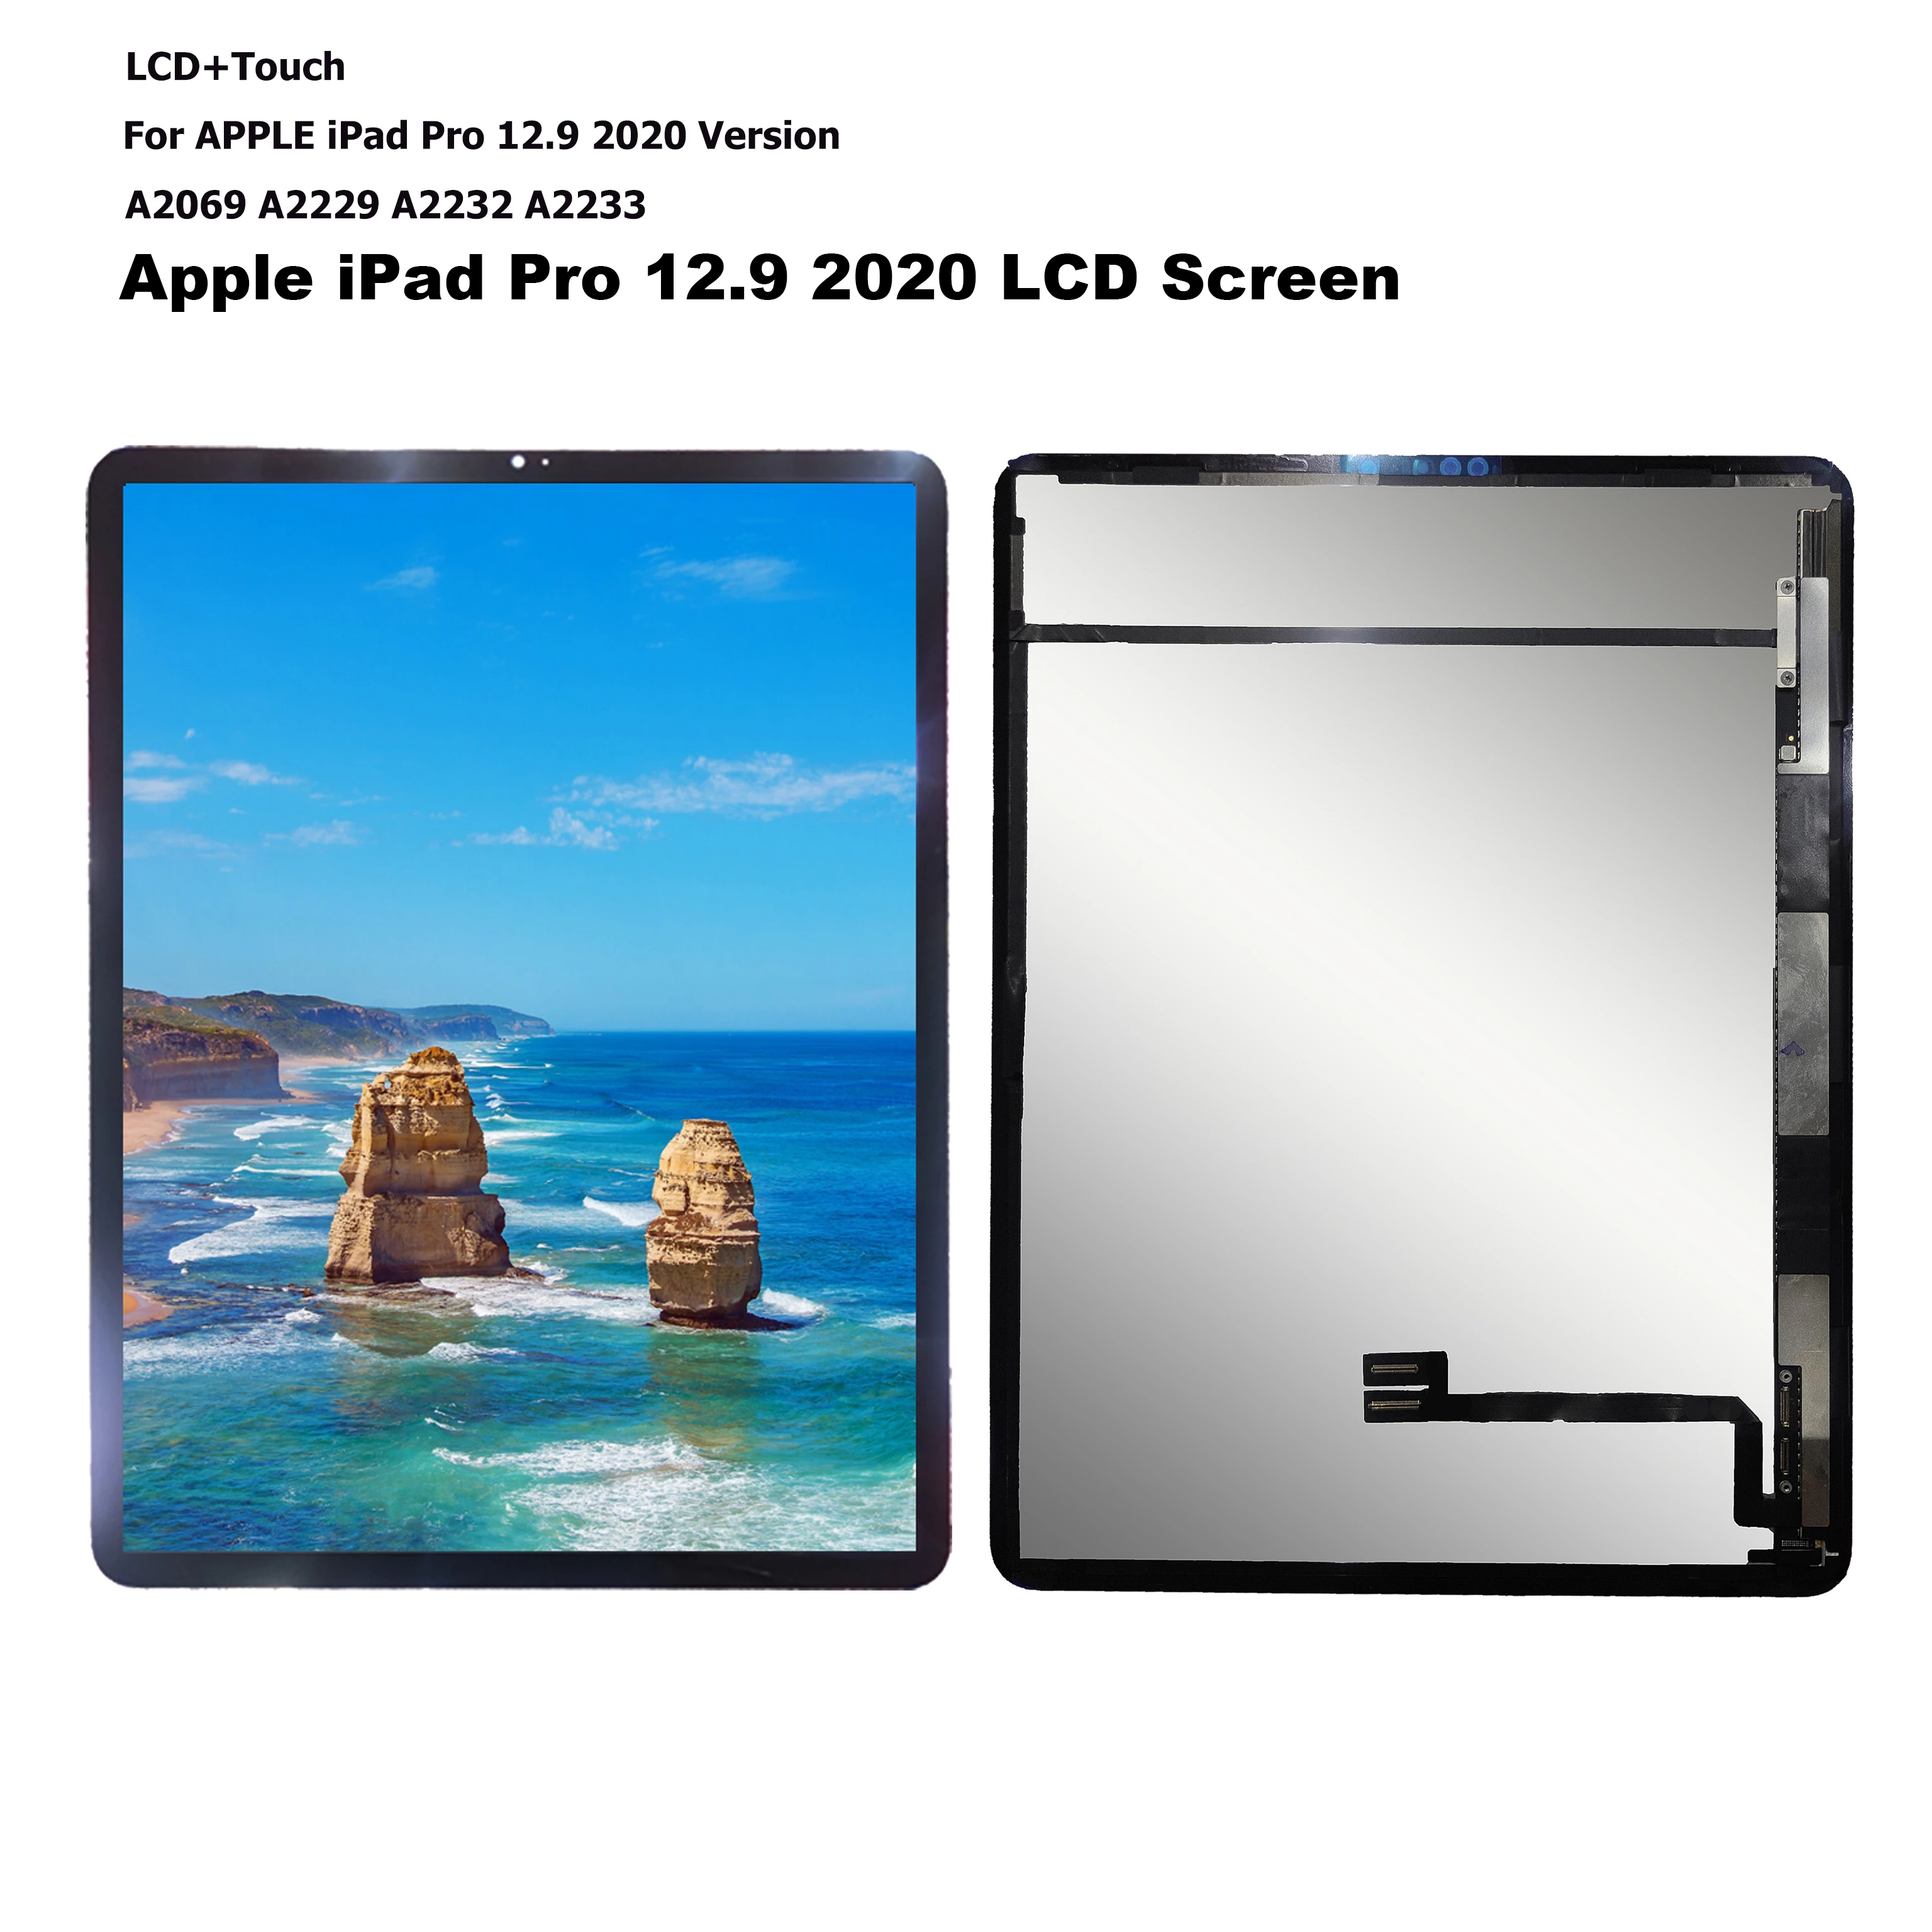 A2233 LCD Screen